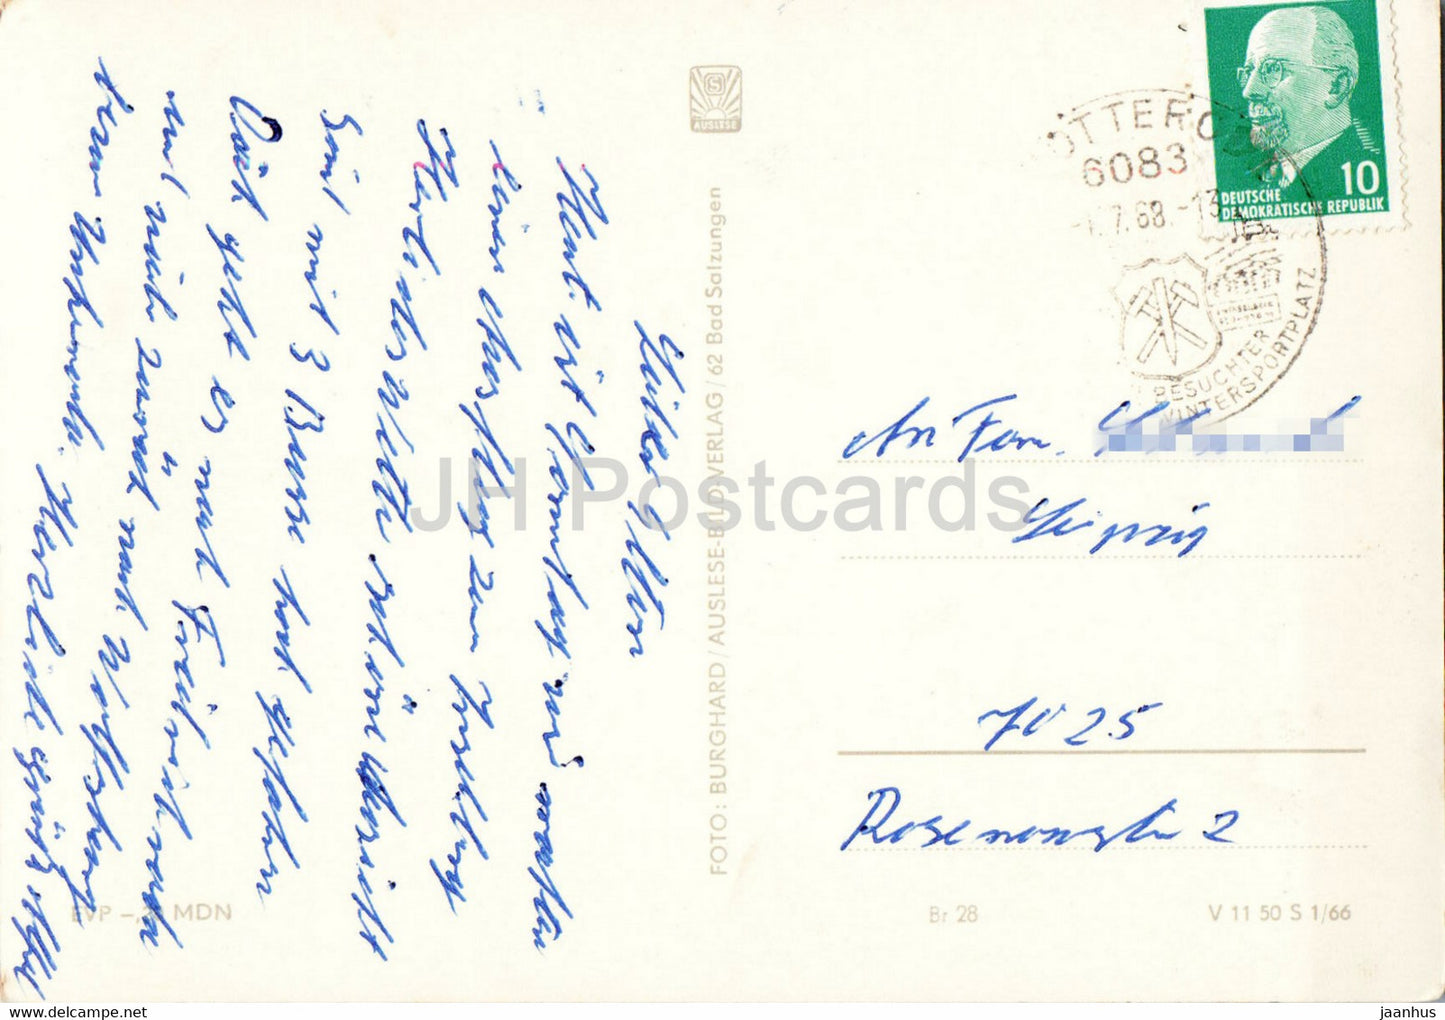 Luftkurort Brotterode am Inselsberg - cow - old postcard - 1968 - Germany DDR - used